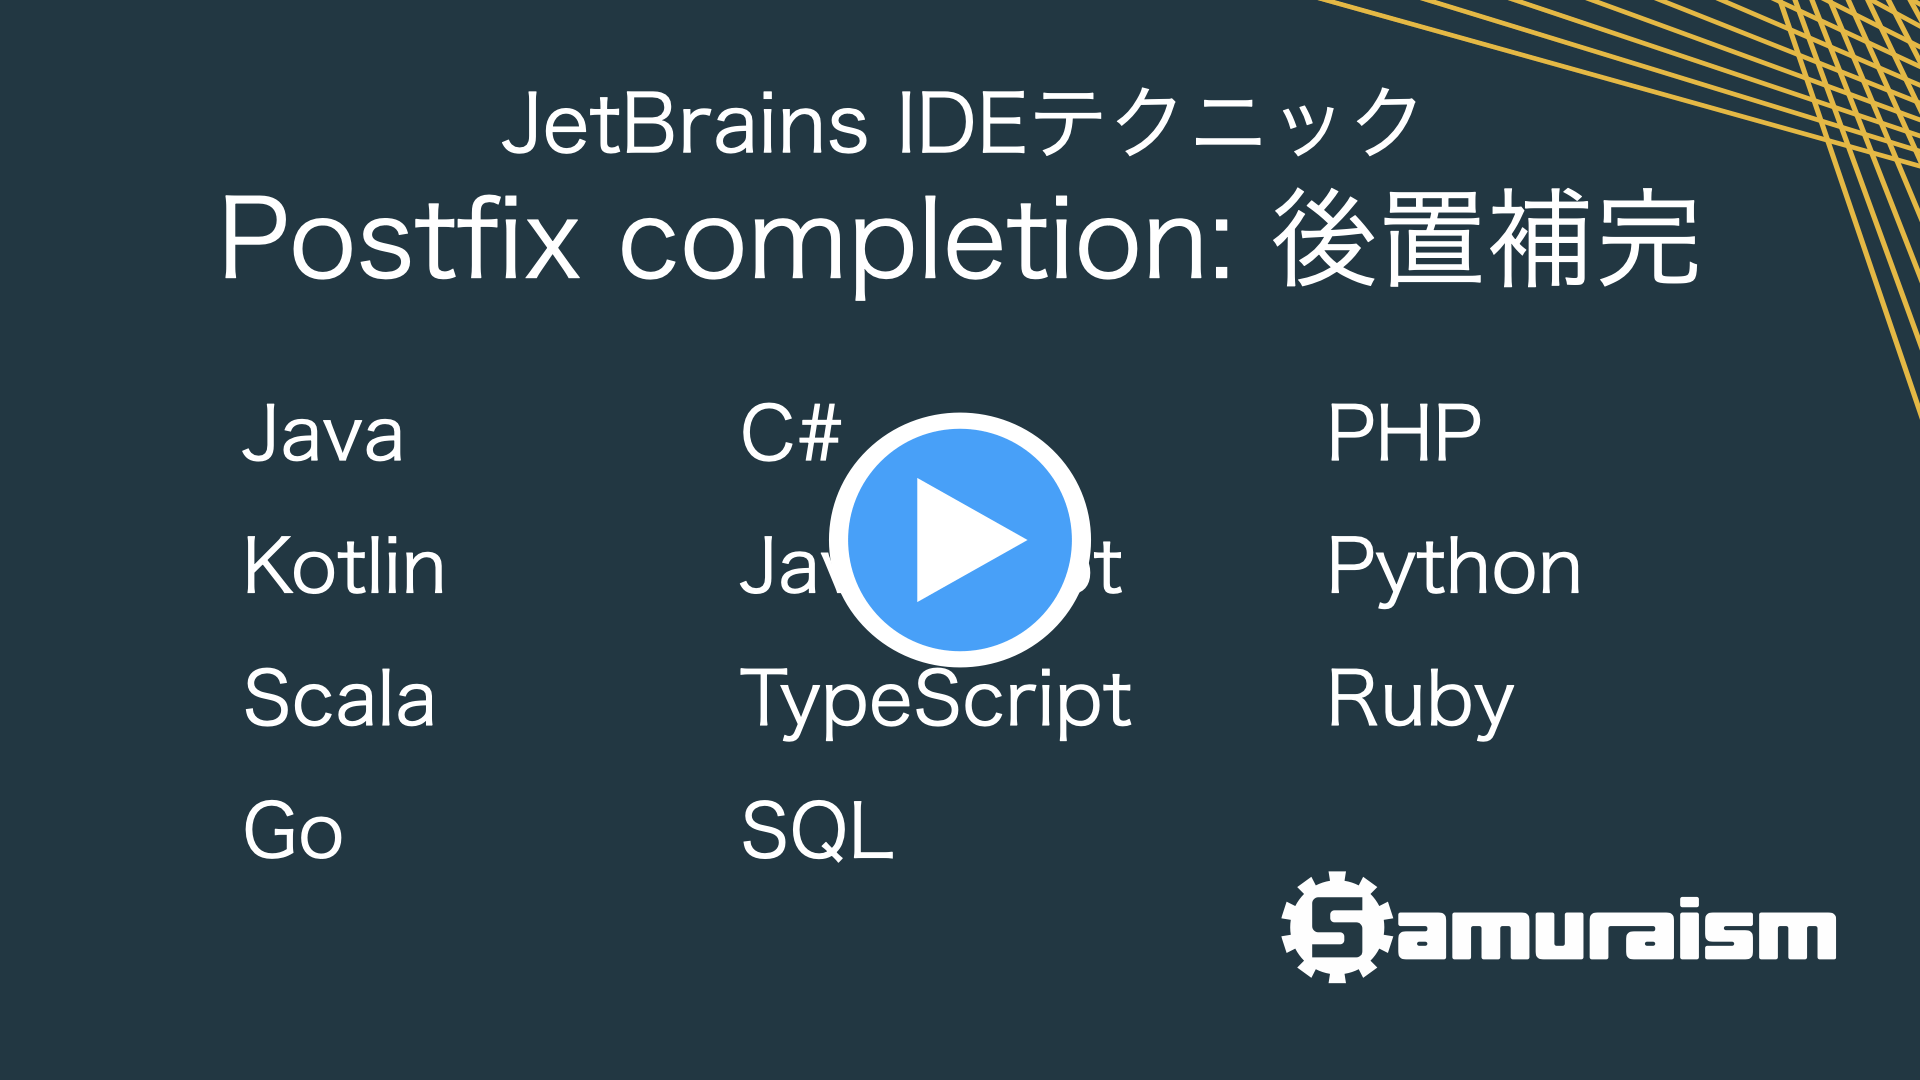 #JetBrainsIDEテクニック – Postfix completion: 後置補完